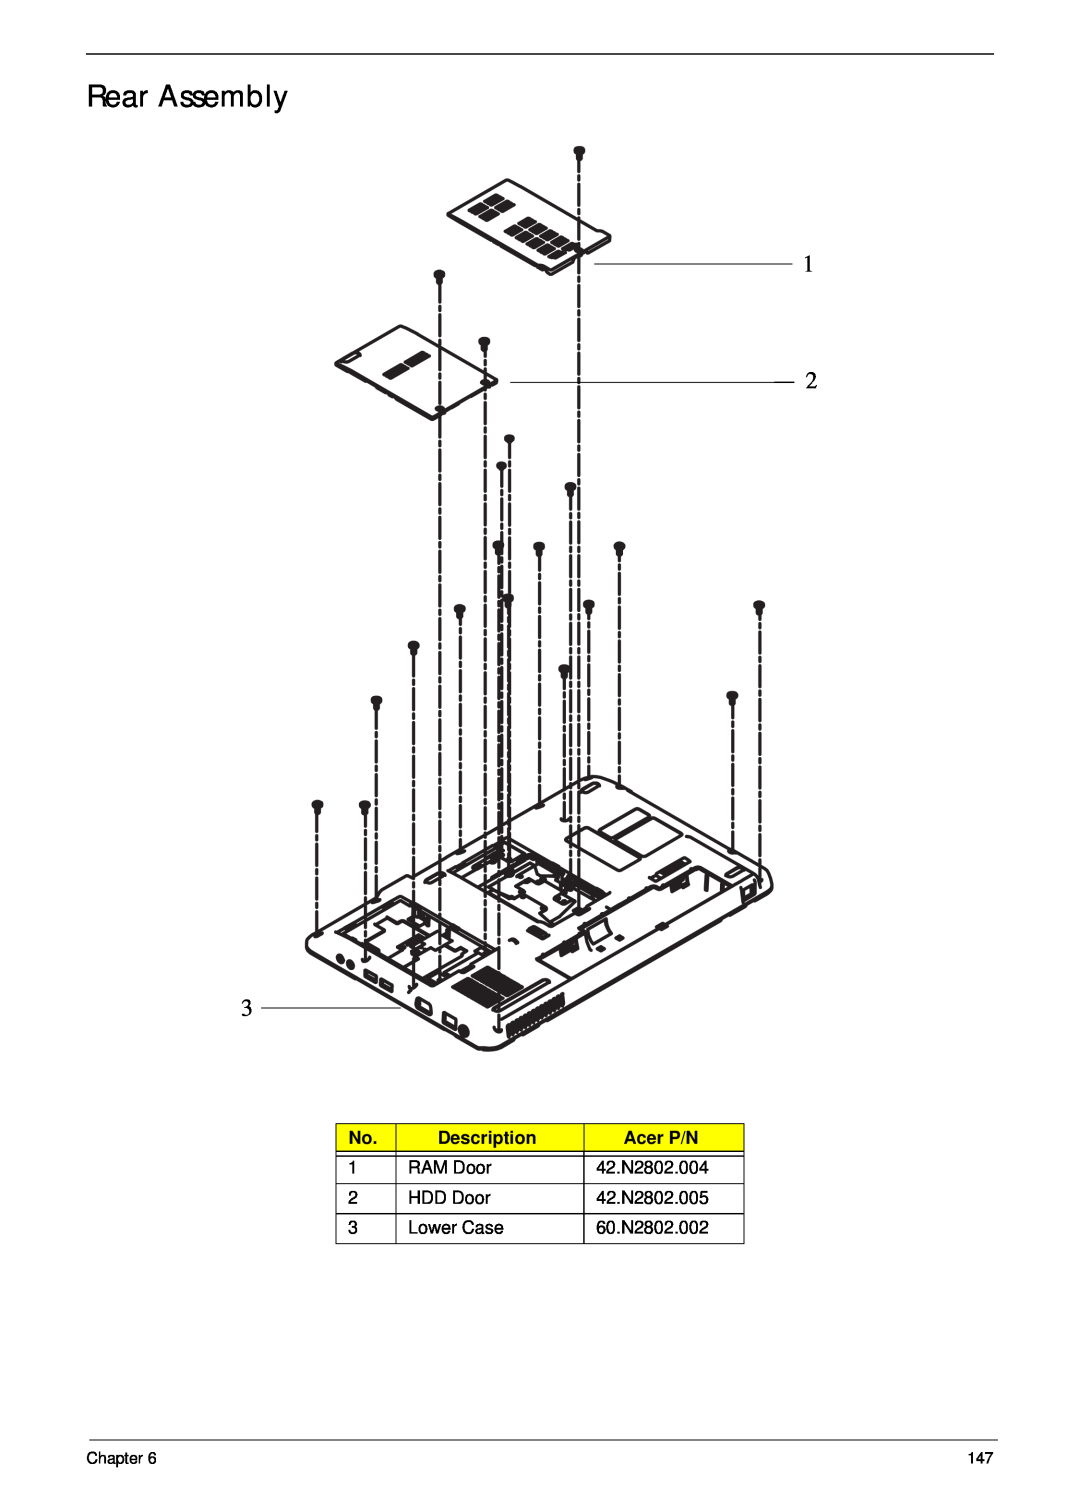 Acer 5532 manual Rear Assembly, Description, Acer P/N, Chapter 